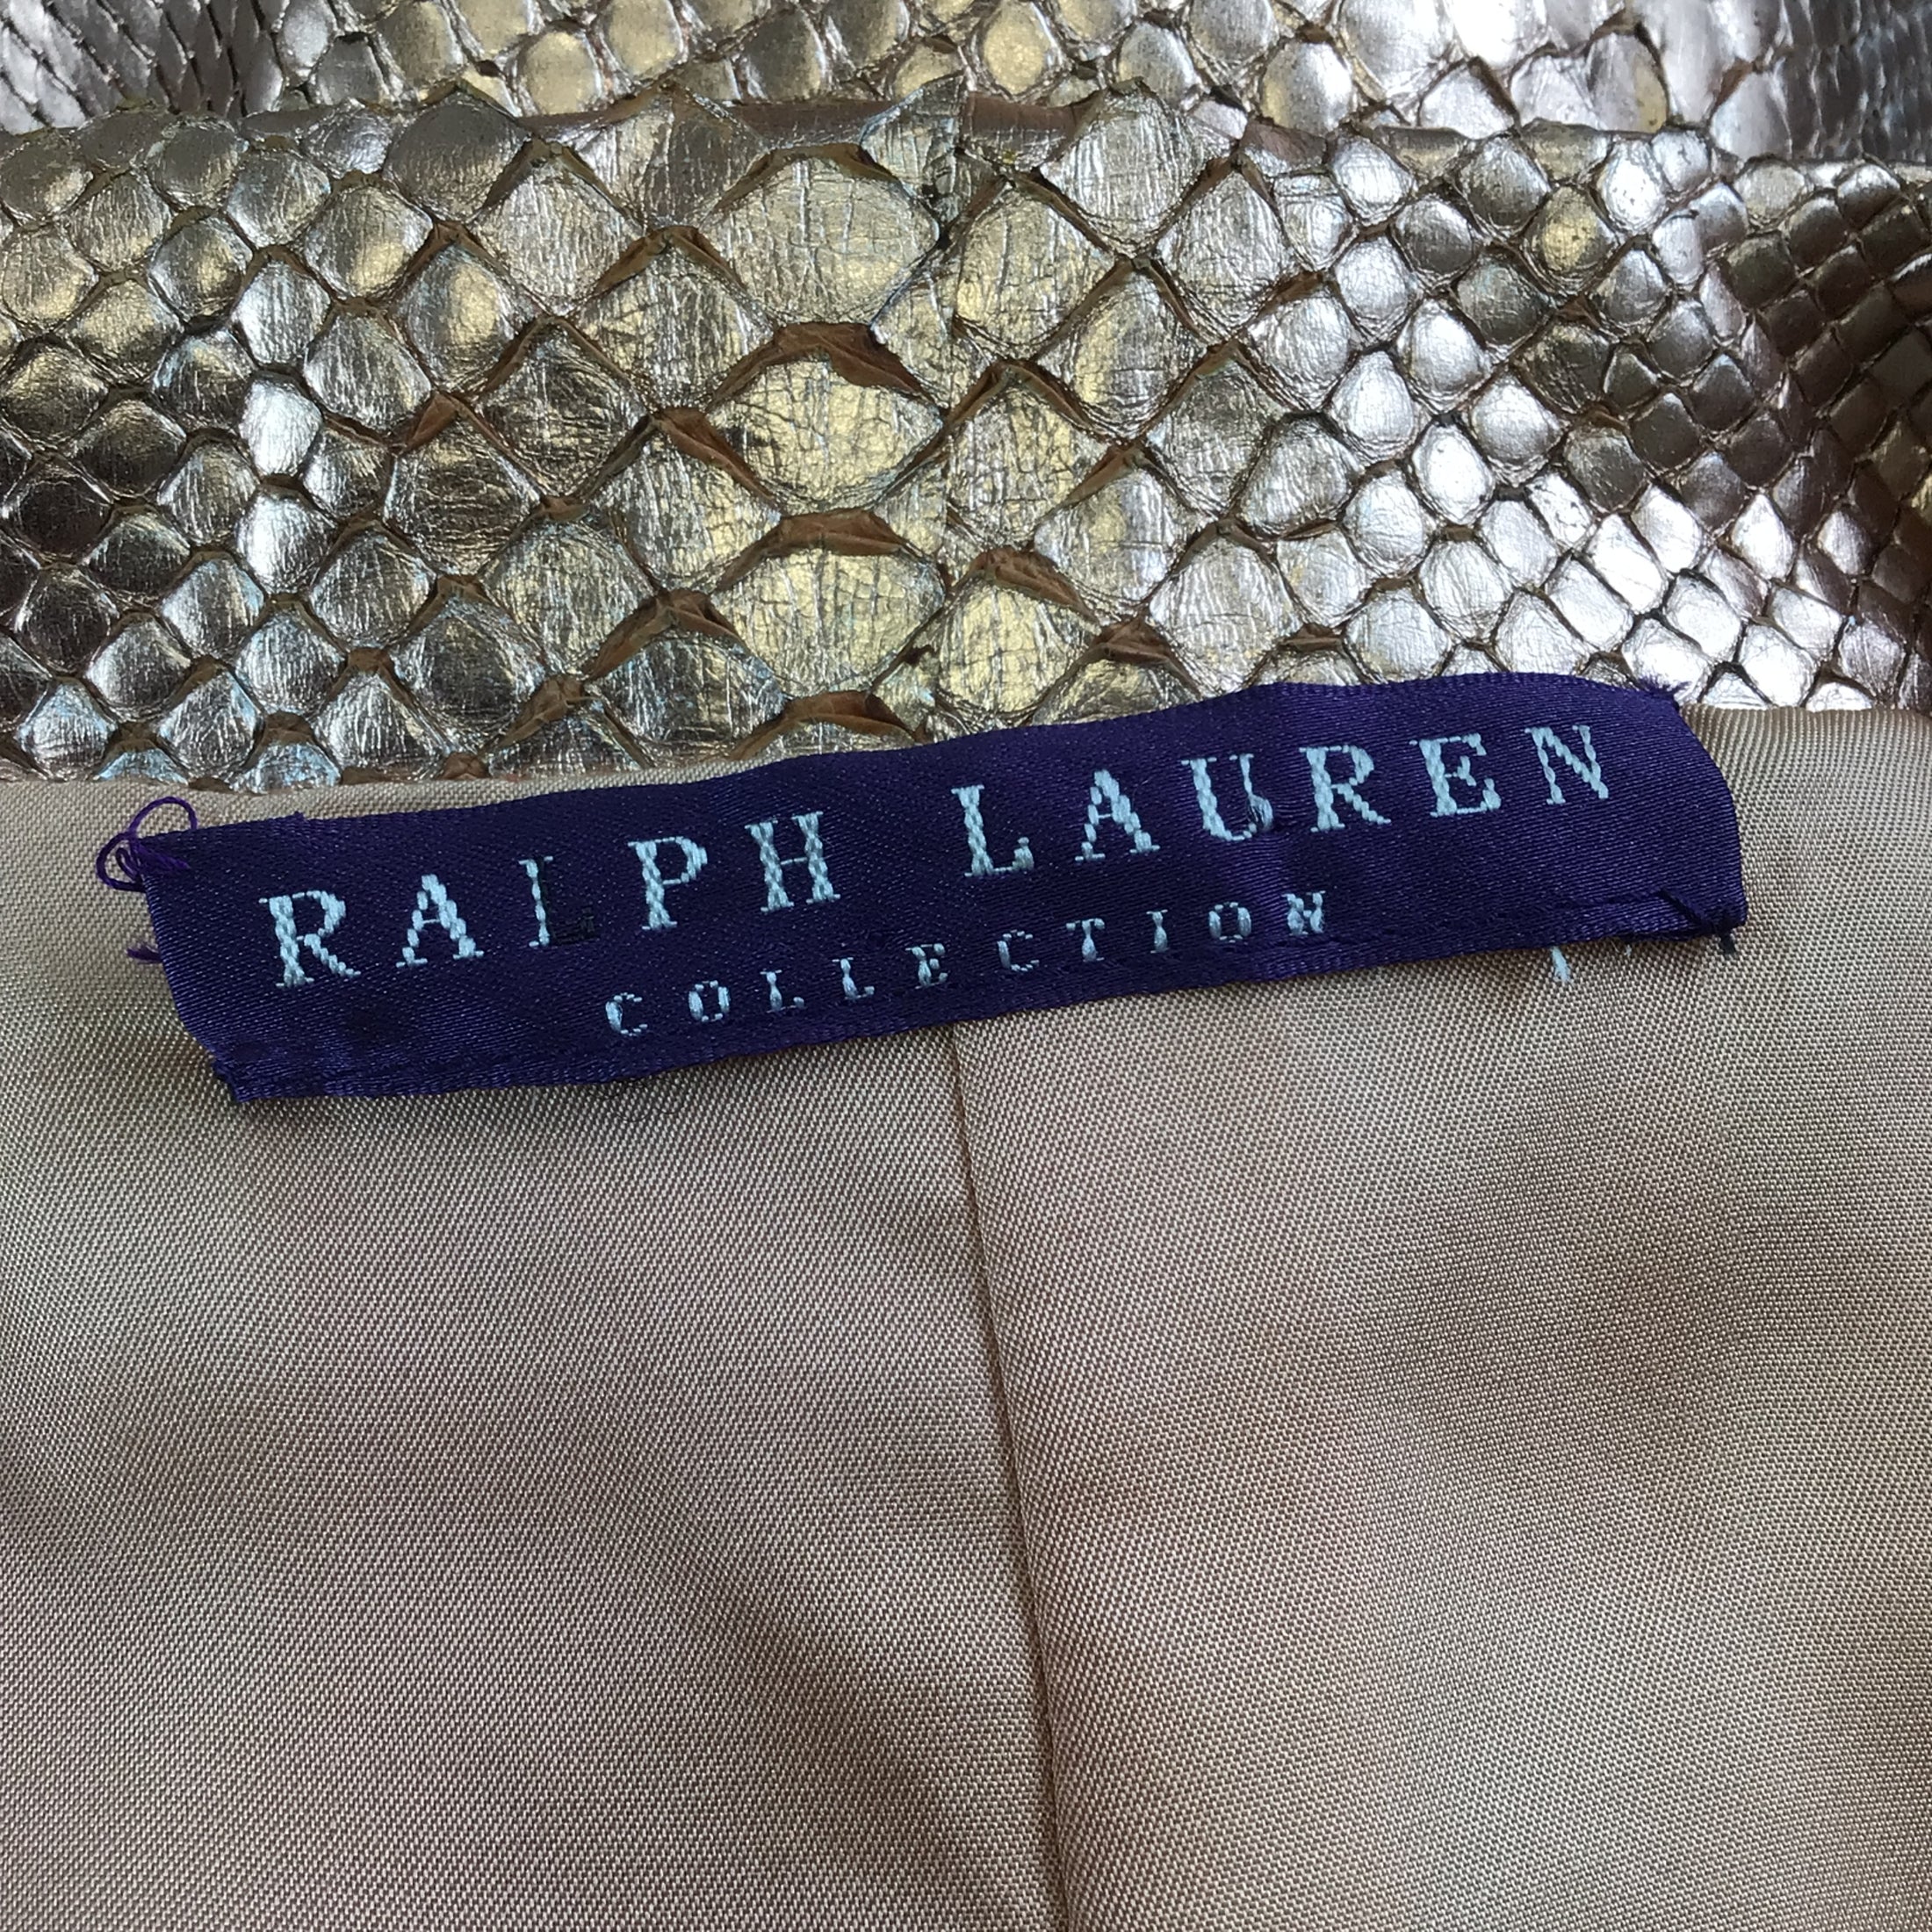 Ralph Lauren Collection Rose Gold Metallic Snakeskin Leather Blazer